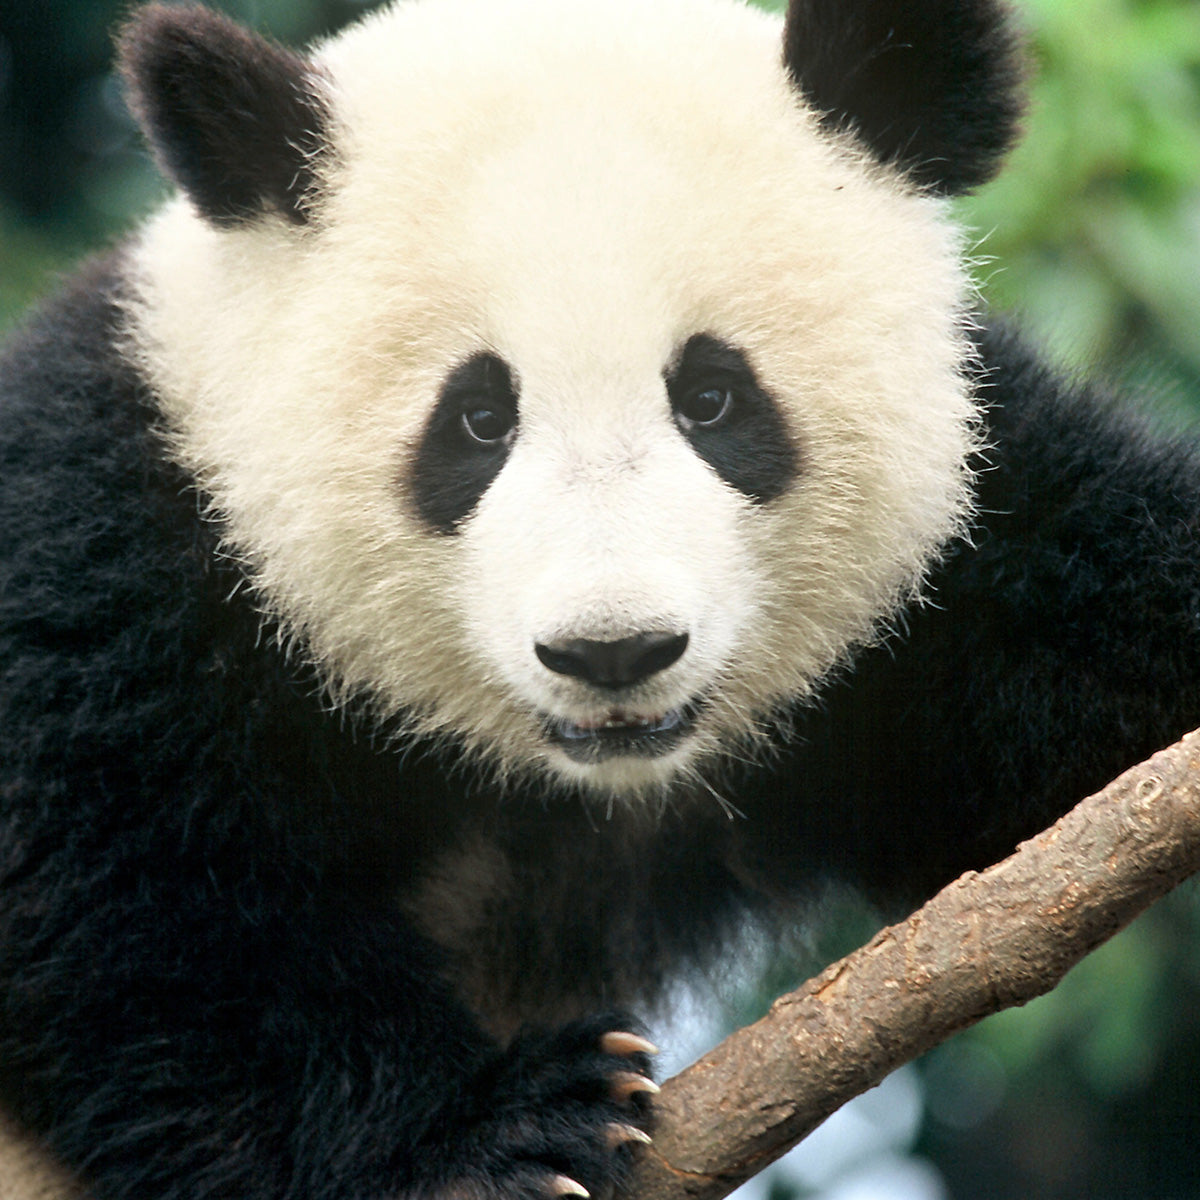 A close up photo of a giant panda 